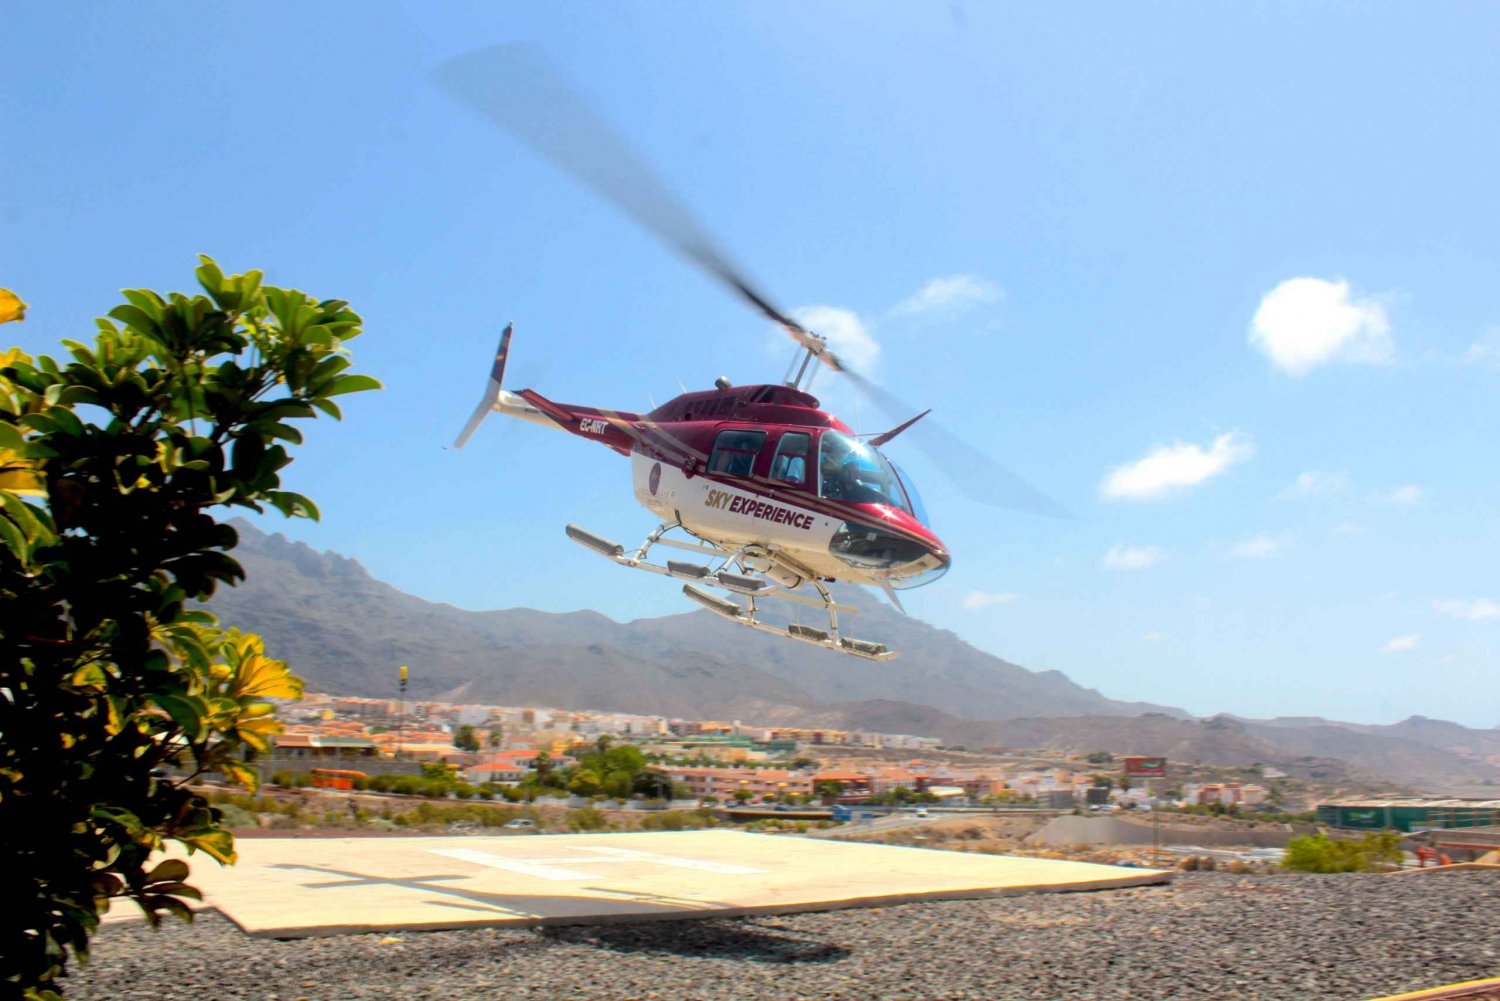 Adeje: Voo panorâmico de helicóptero em Tenerife